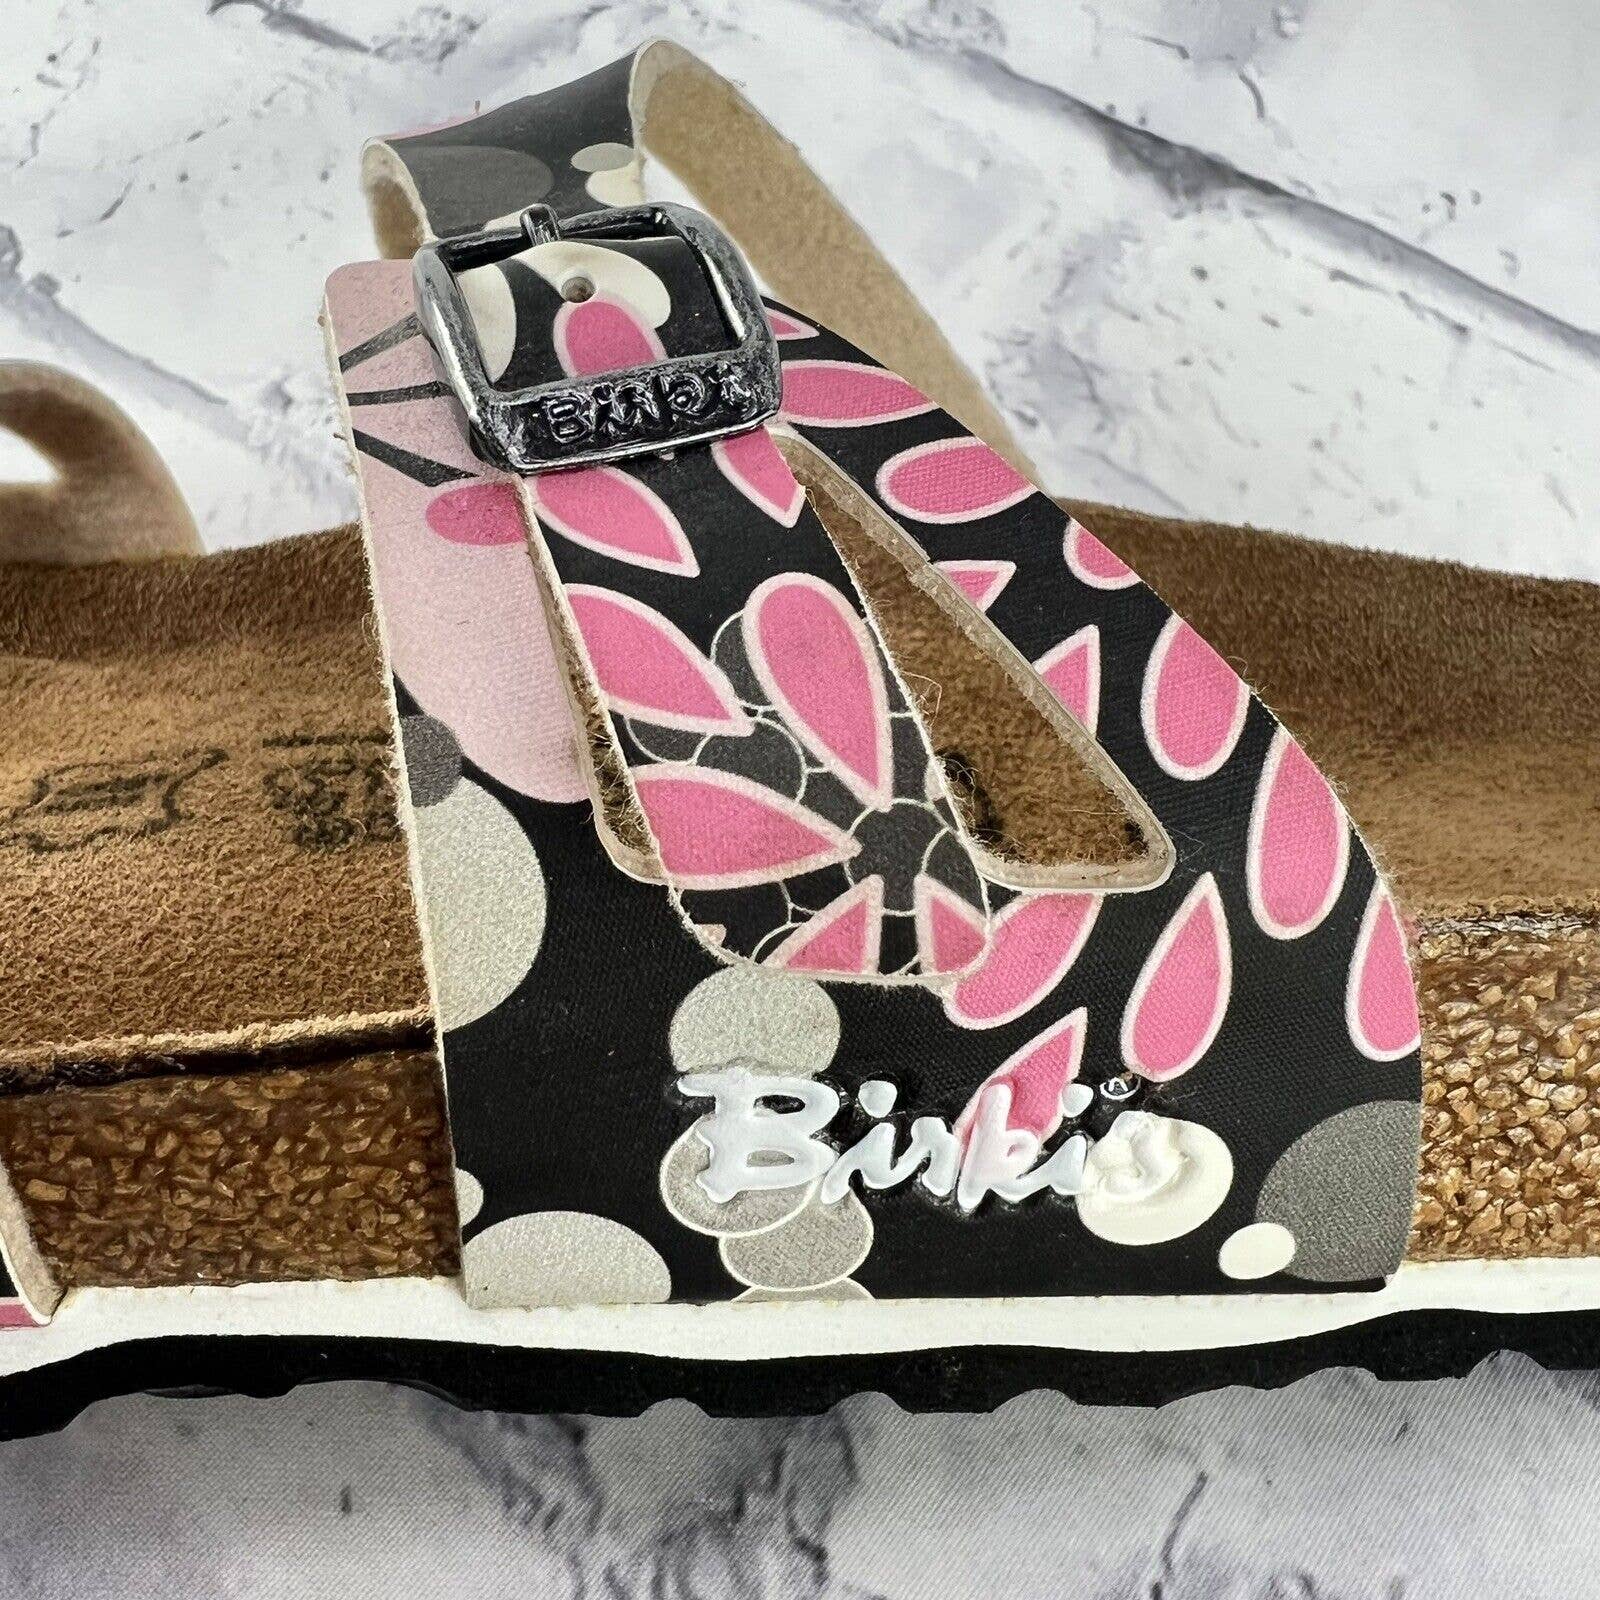 Birkenstock Birki’s Sandals Womens 37 (US 6 - 6.5) Double Strap Floral